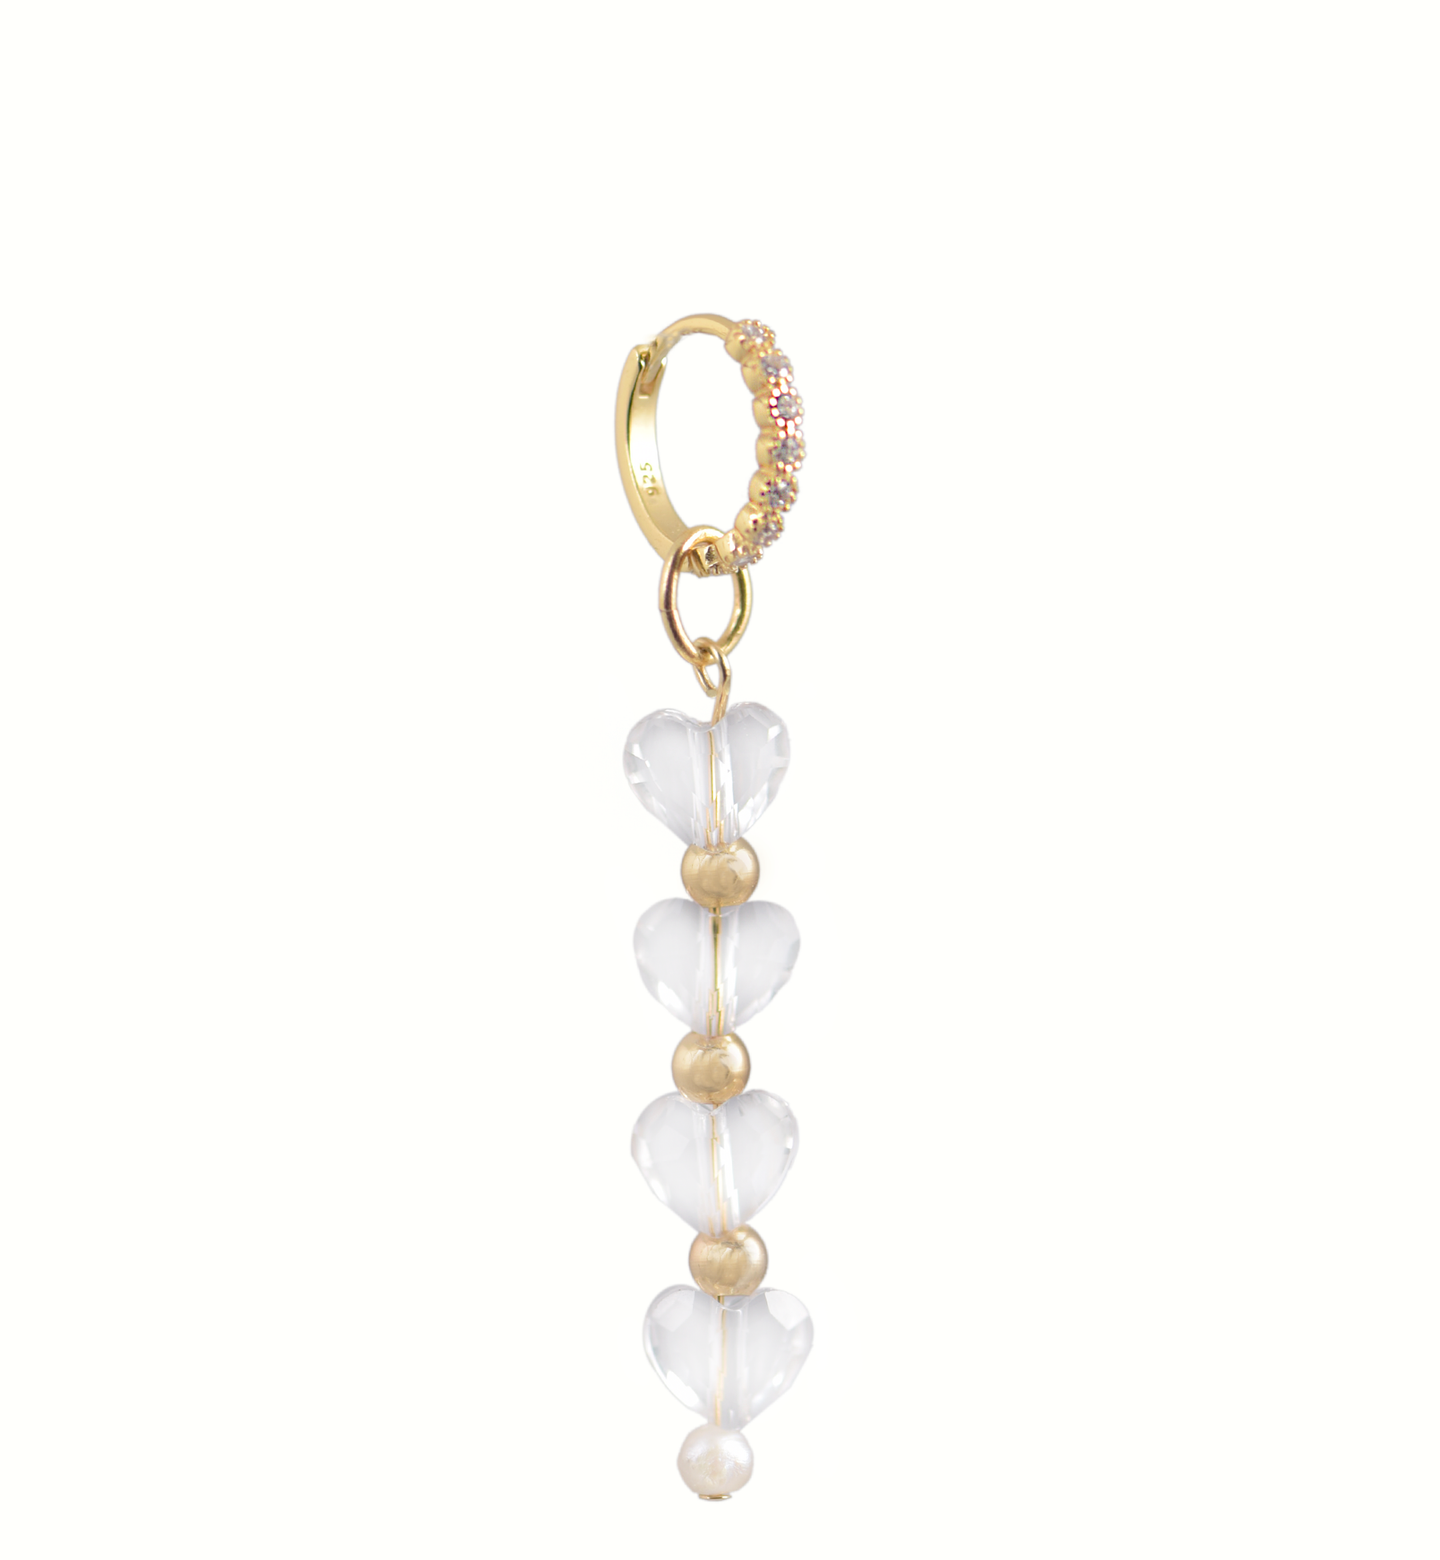 Romeus Swarovski Crystal Heart Beads & Zirconia Hoop Earring